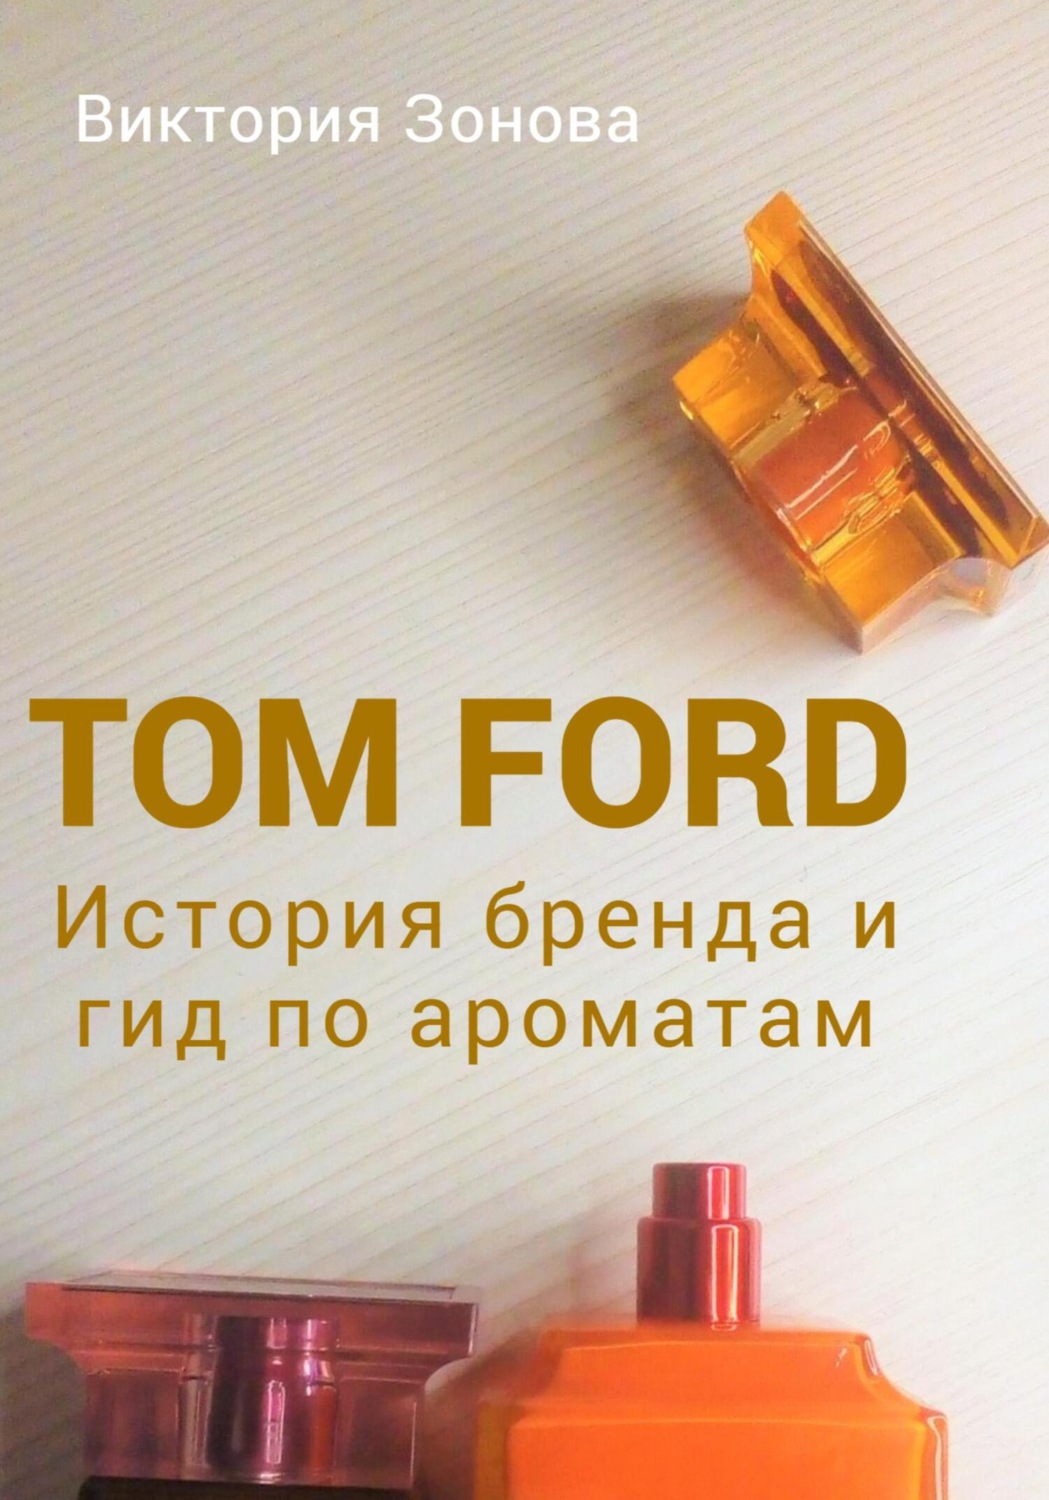 Книга тома форда. Книги о парфюмерии. Том Форд история бренда. Tom Ford (brand). Книга том Форд.